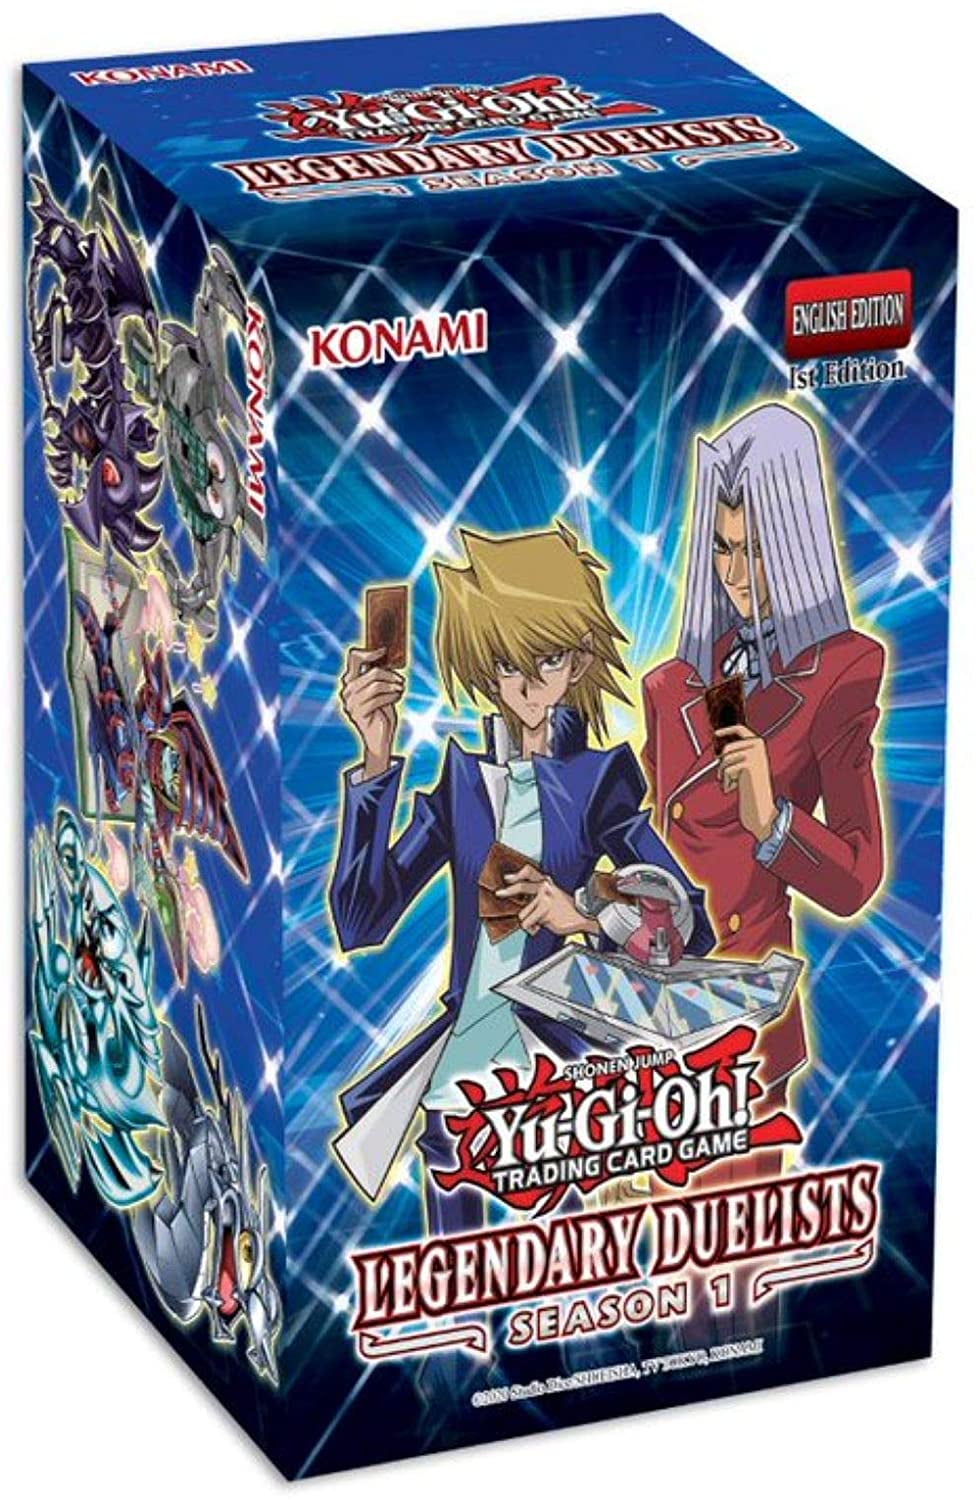 Legendary Duelists Season 1 1st Edition 1x Display Box Factory Sealed Yu-Gi-Oh! 